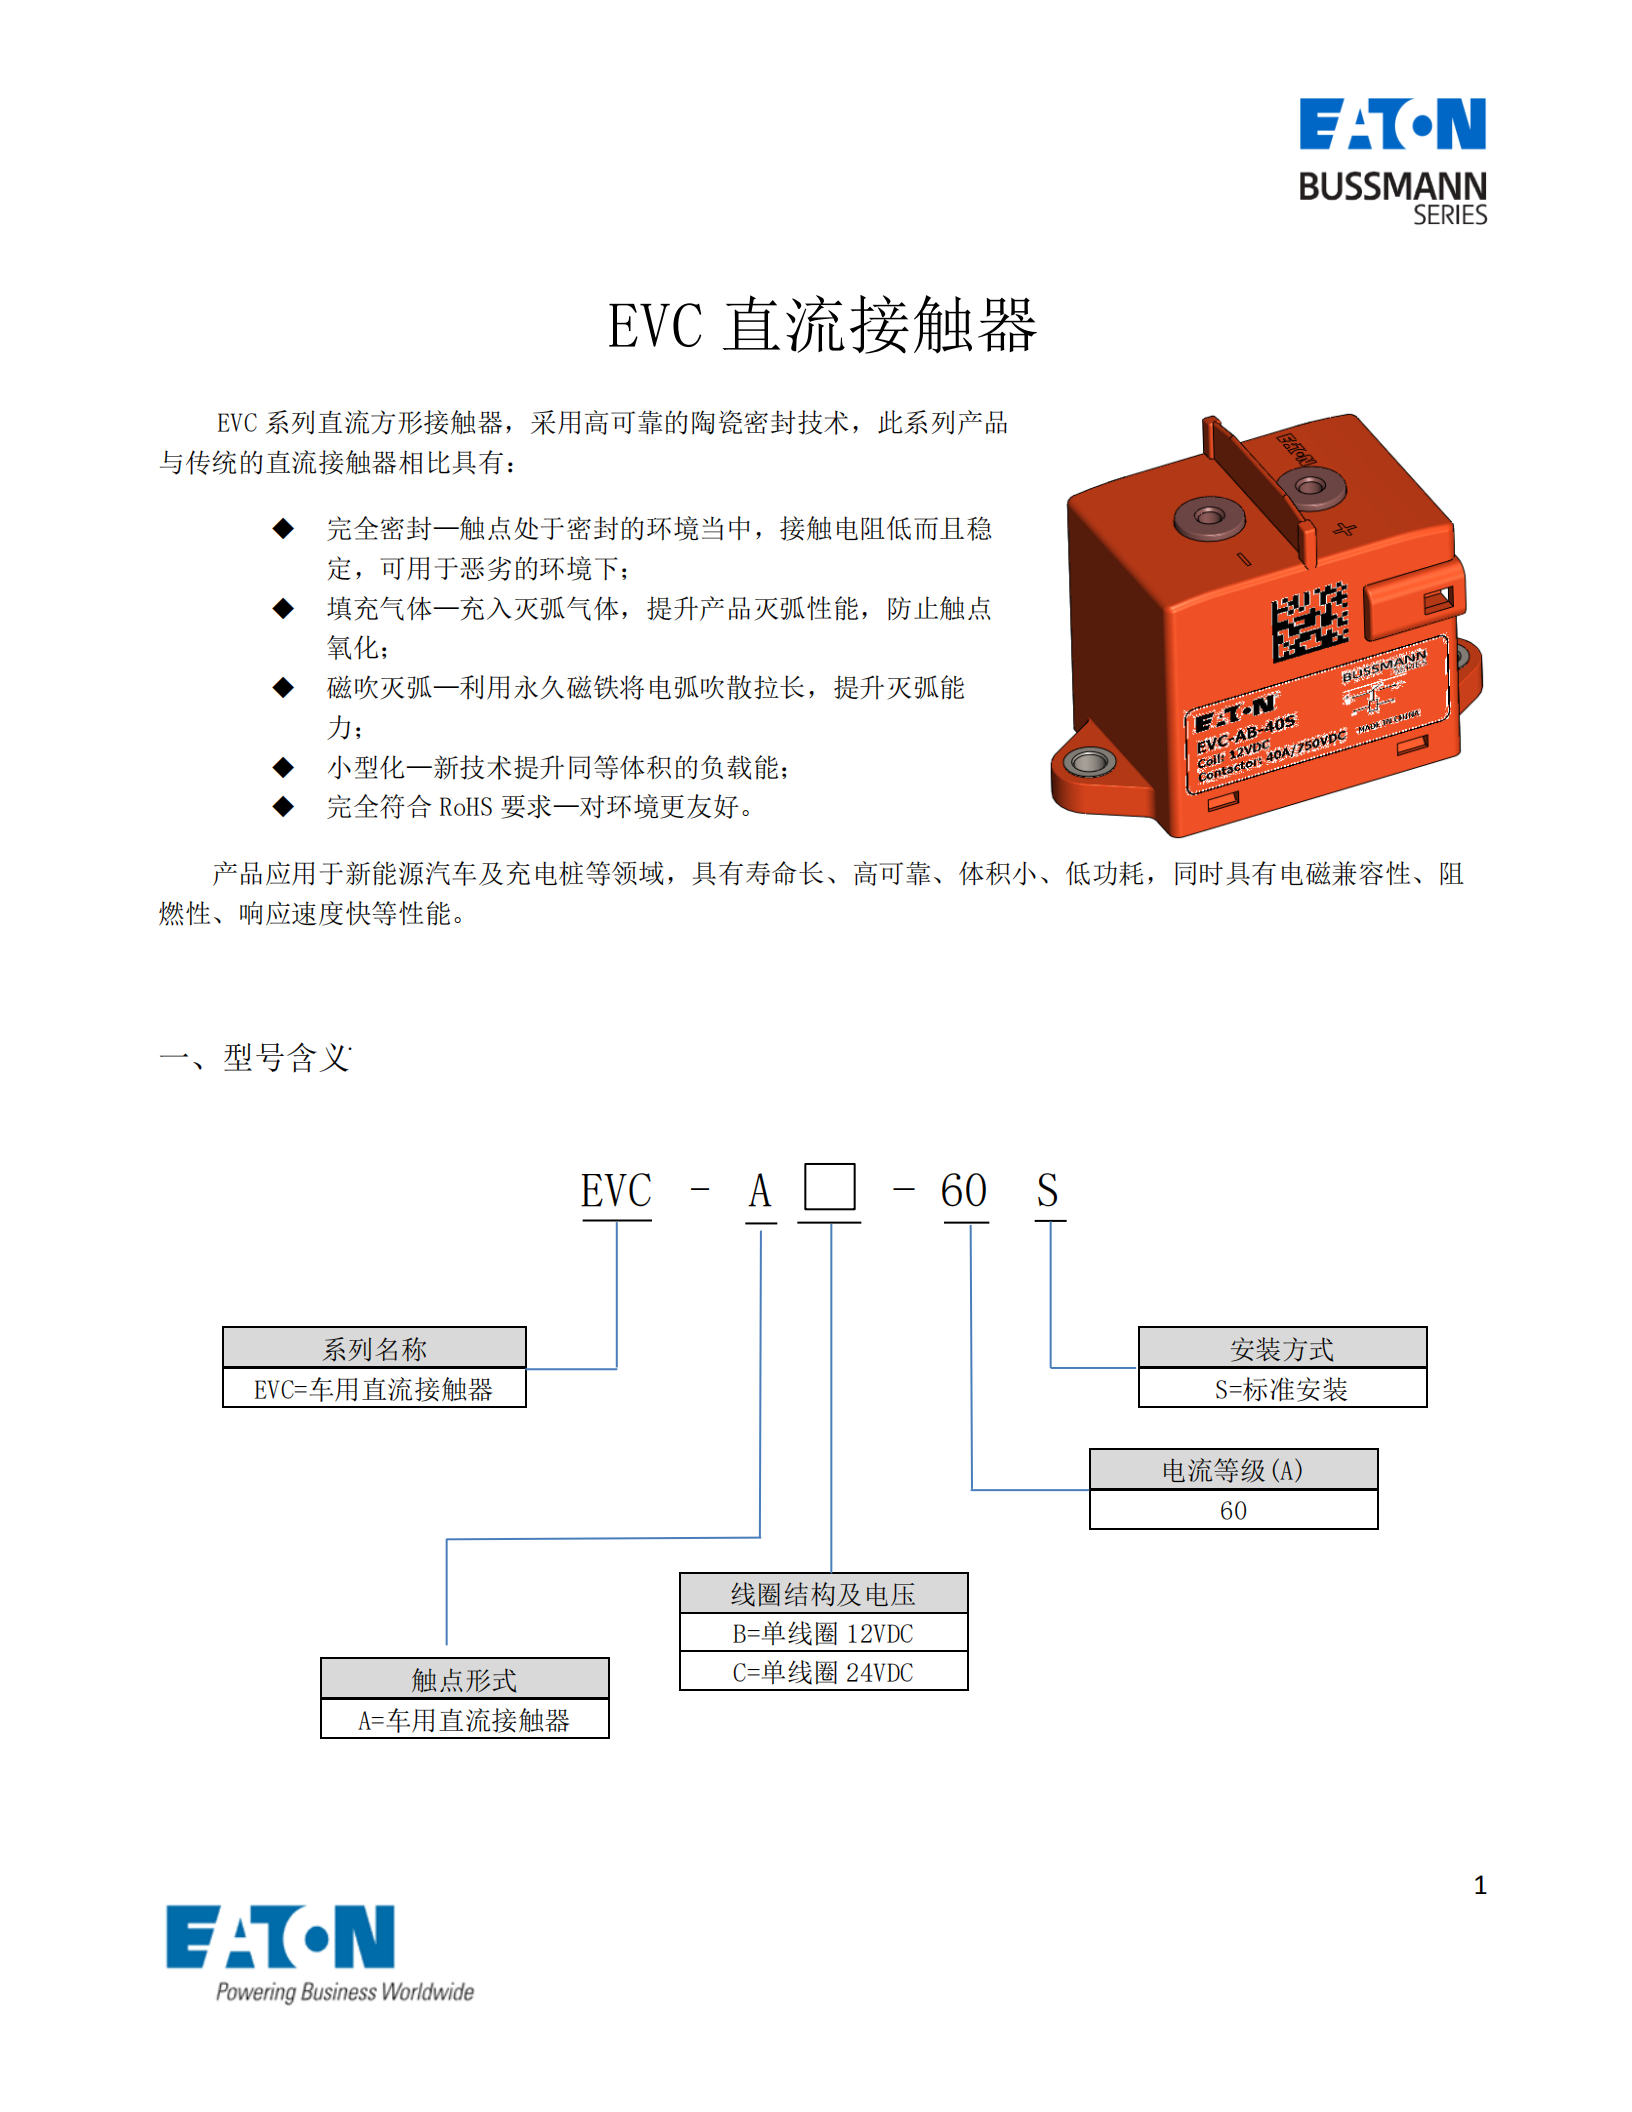 EVC-AB-60S直流接触器